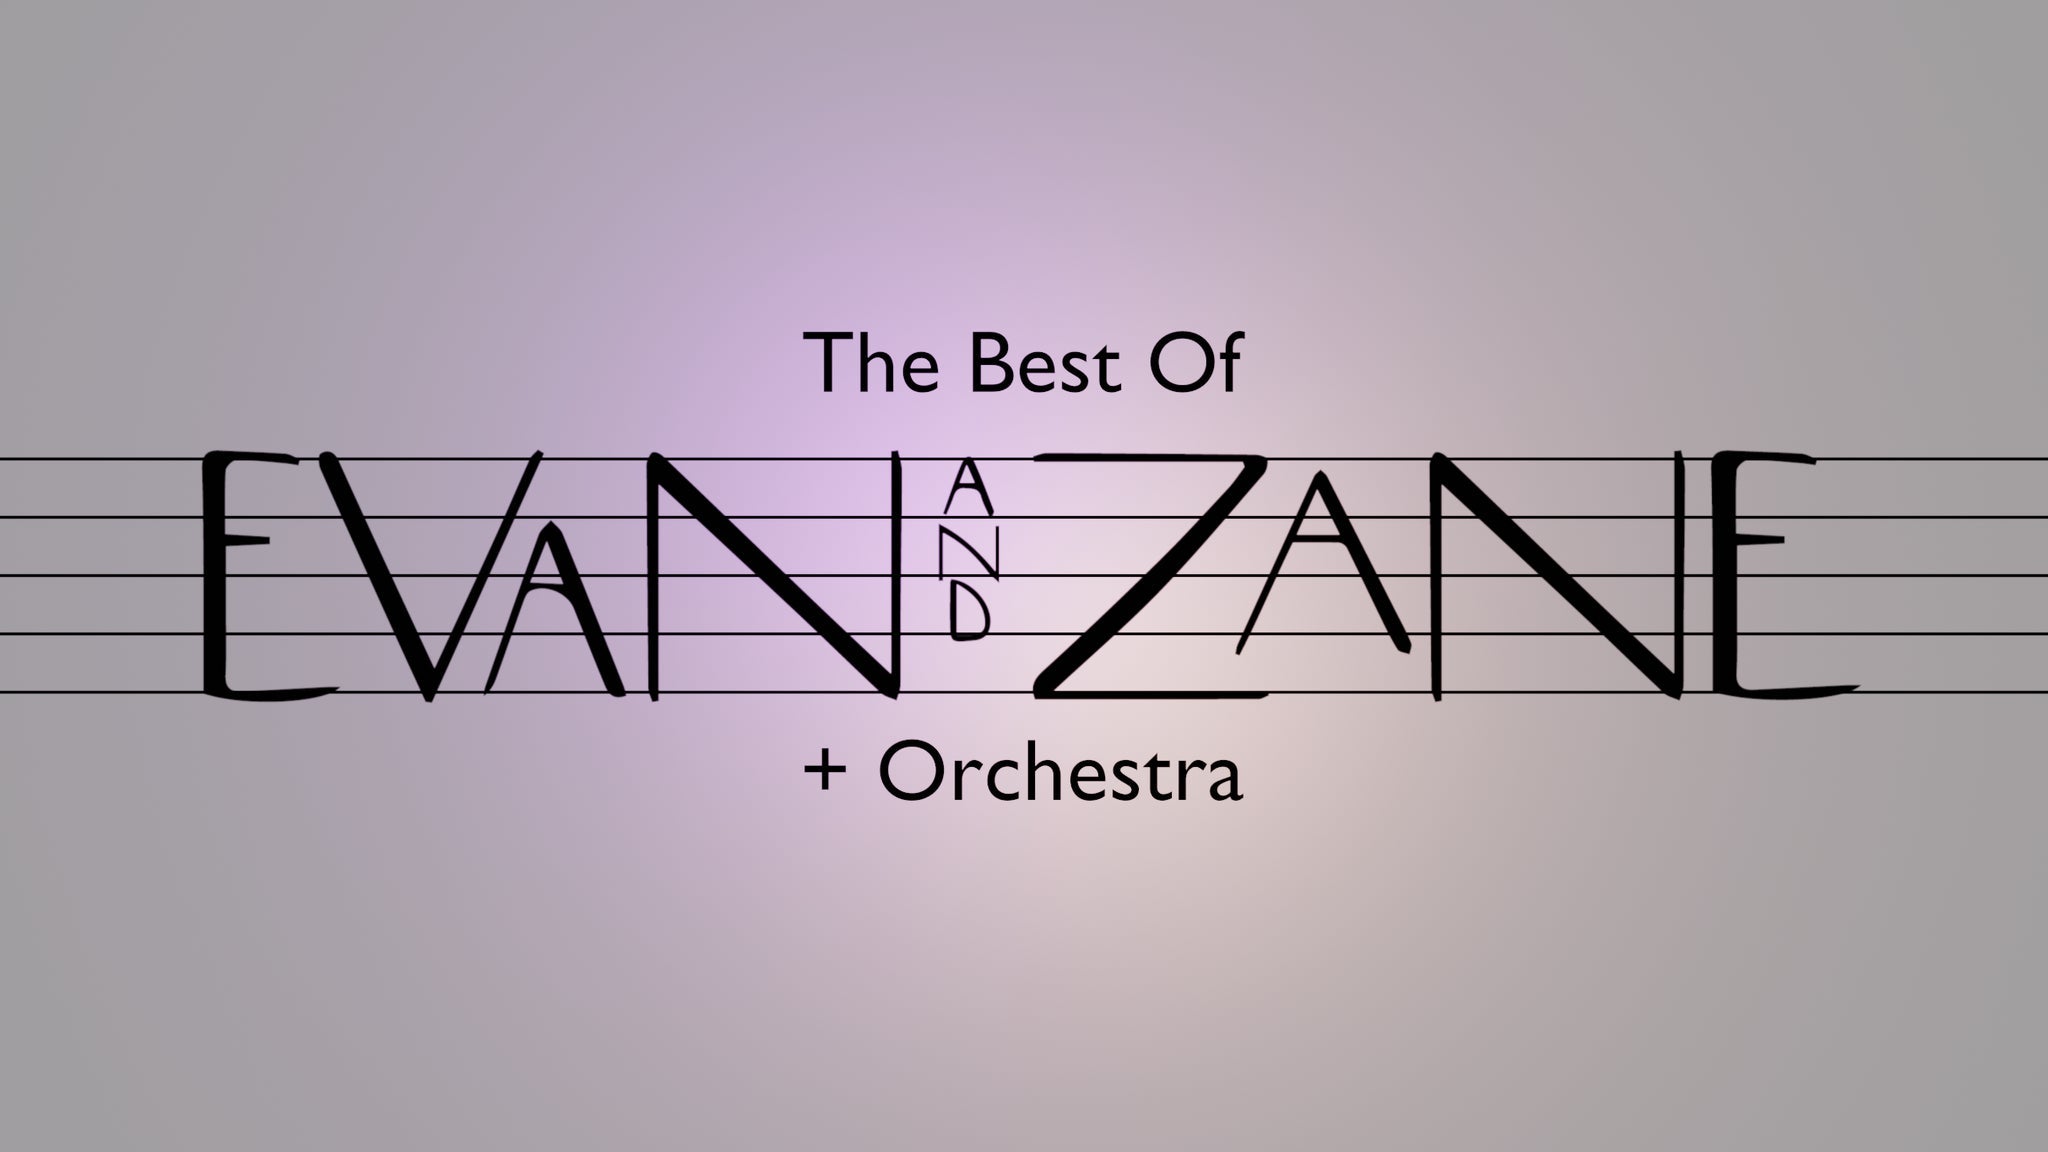 The Best Of Evan + Zane + Orchestra in Glendale promo photo for Fan presale offer code